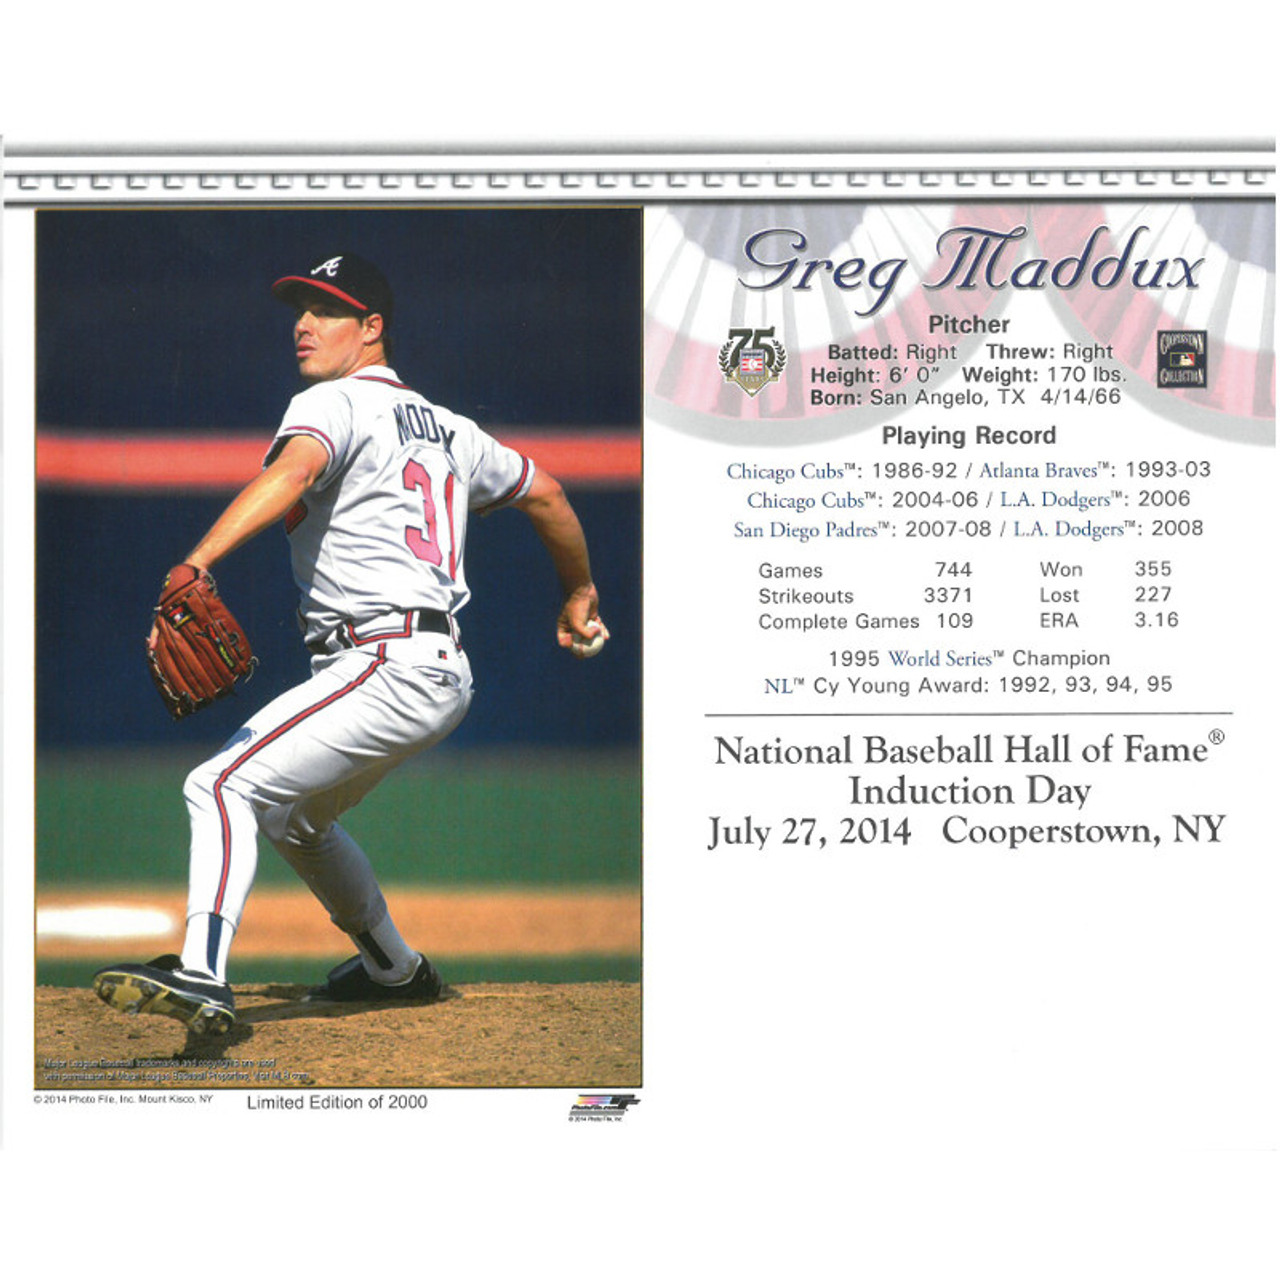 2014 Hall of Fame profile: Greg Maddux 